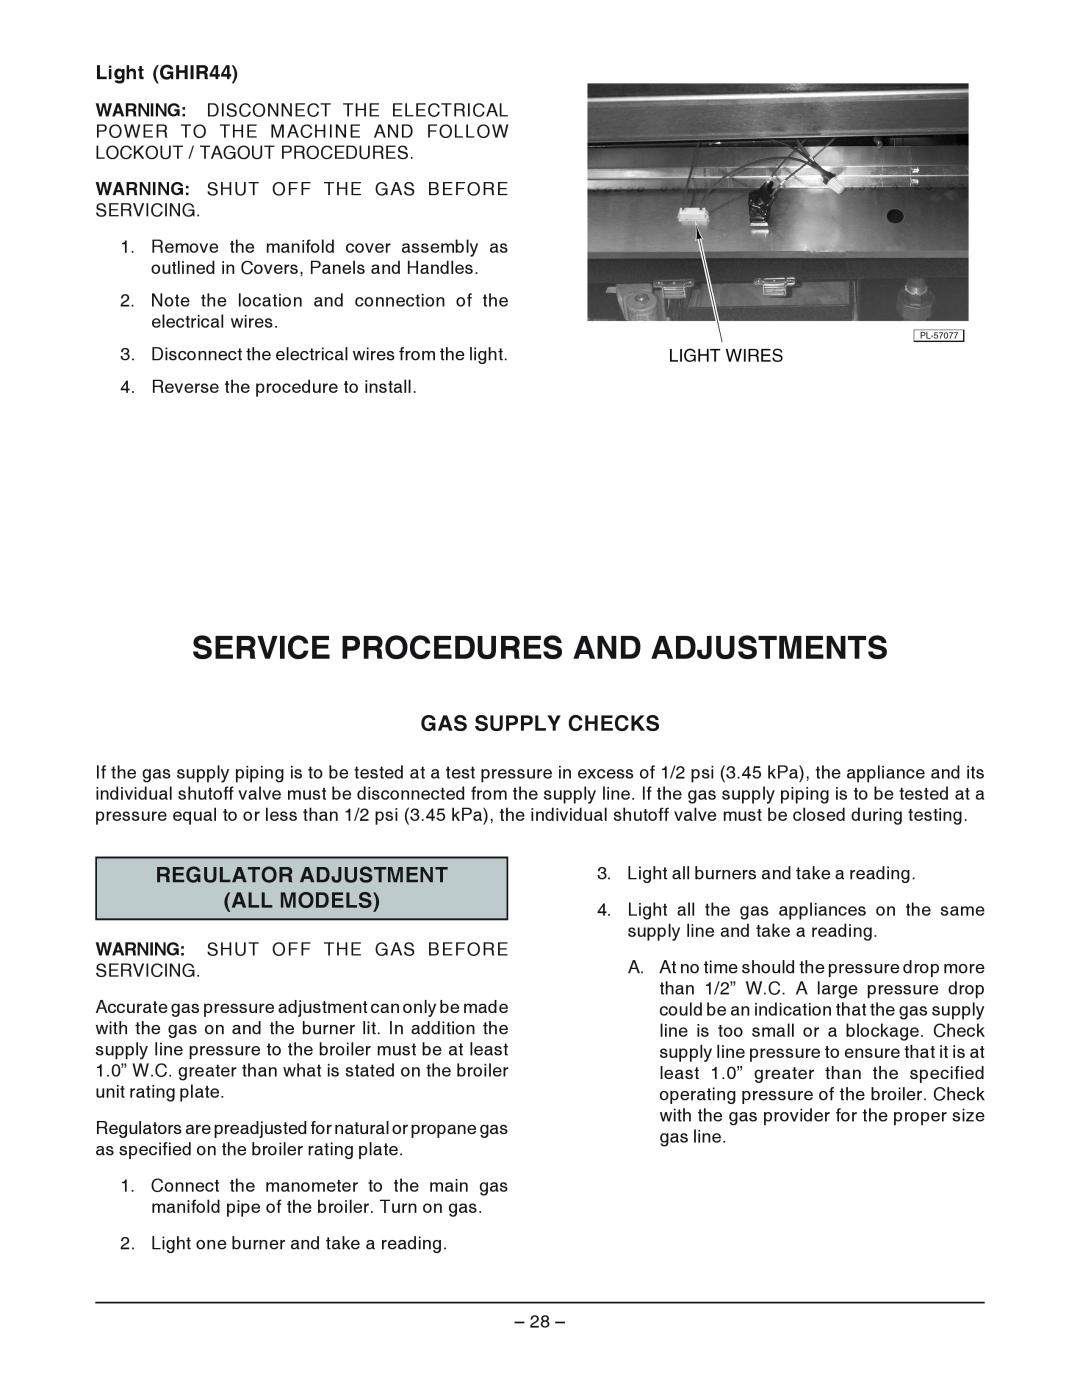 Vulcan-Hart HCB1, IR1 Service Procedures And Adjustments, Gas Supply Checks, Regulator Adjustment All Models, Light GHIR44 